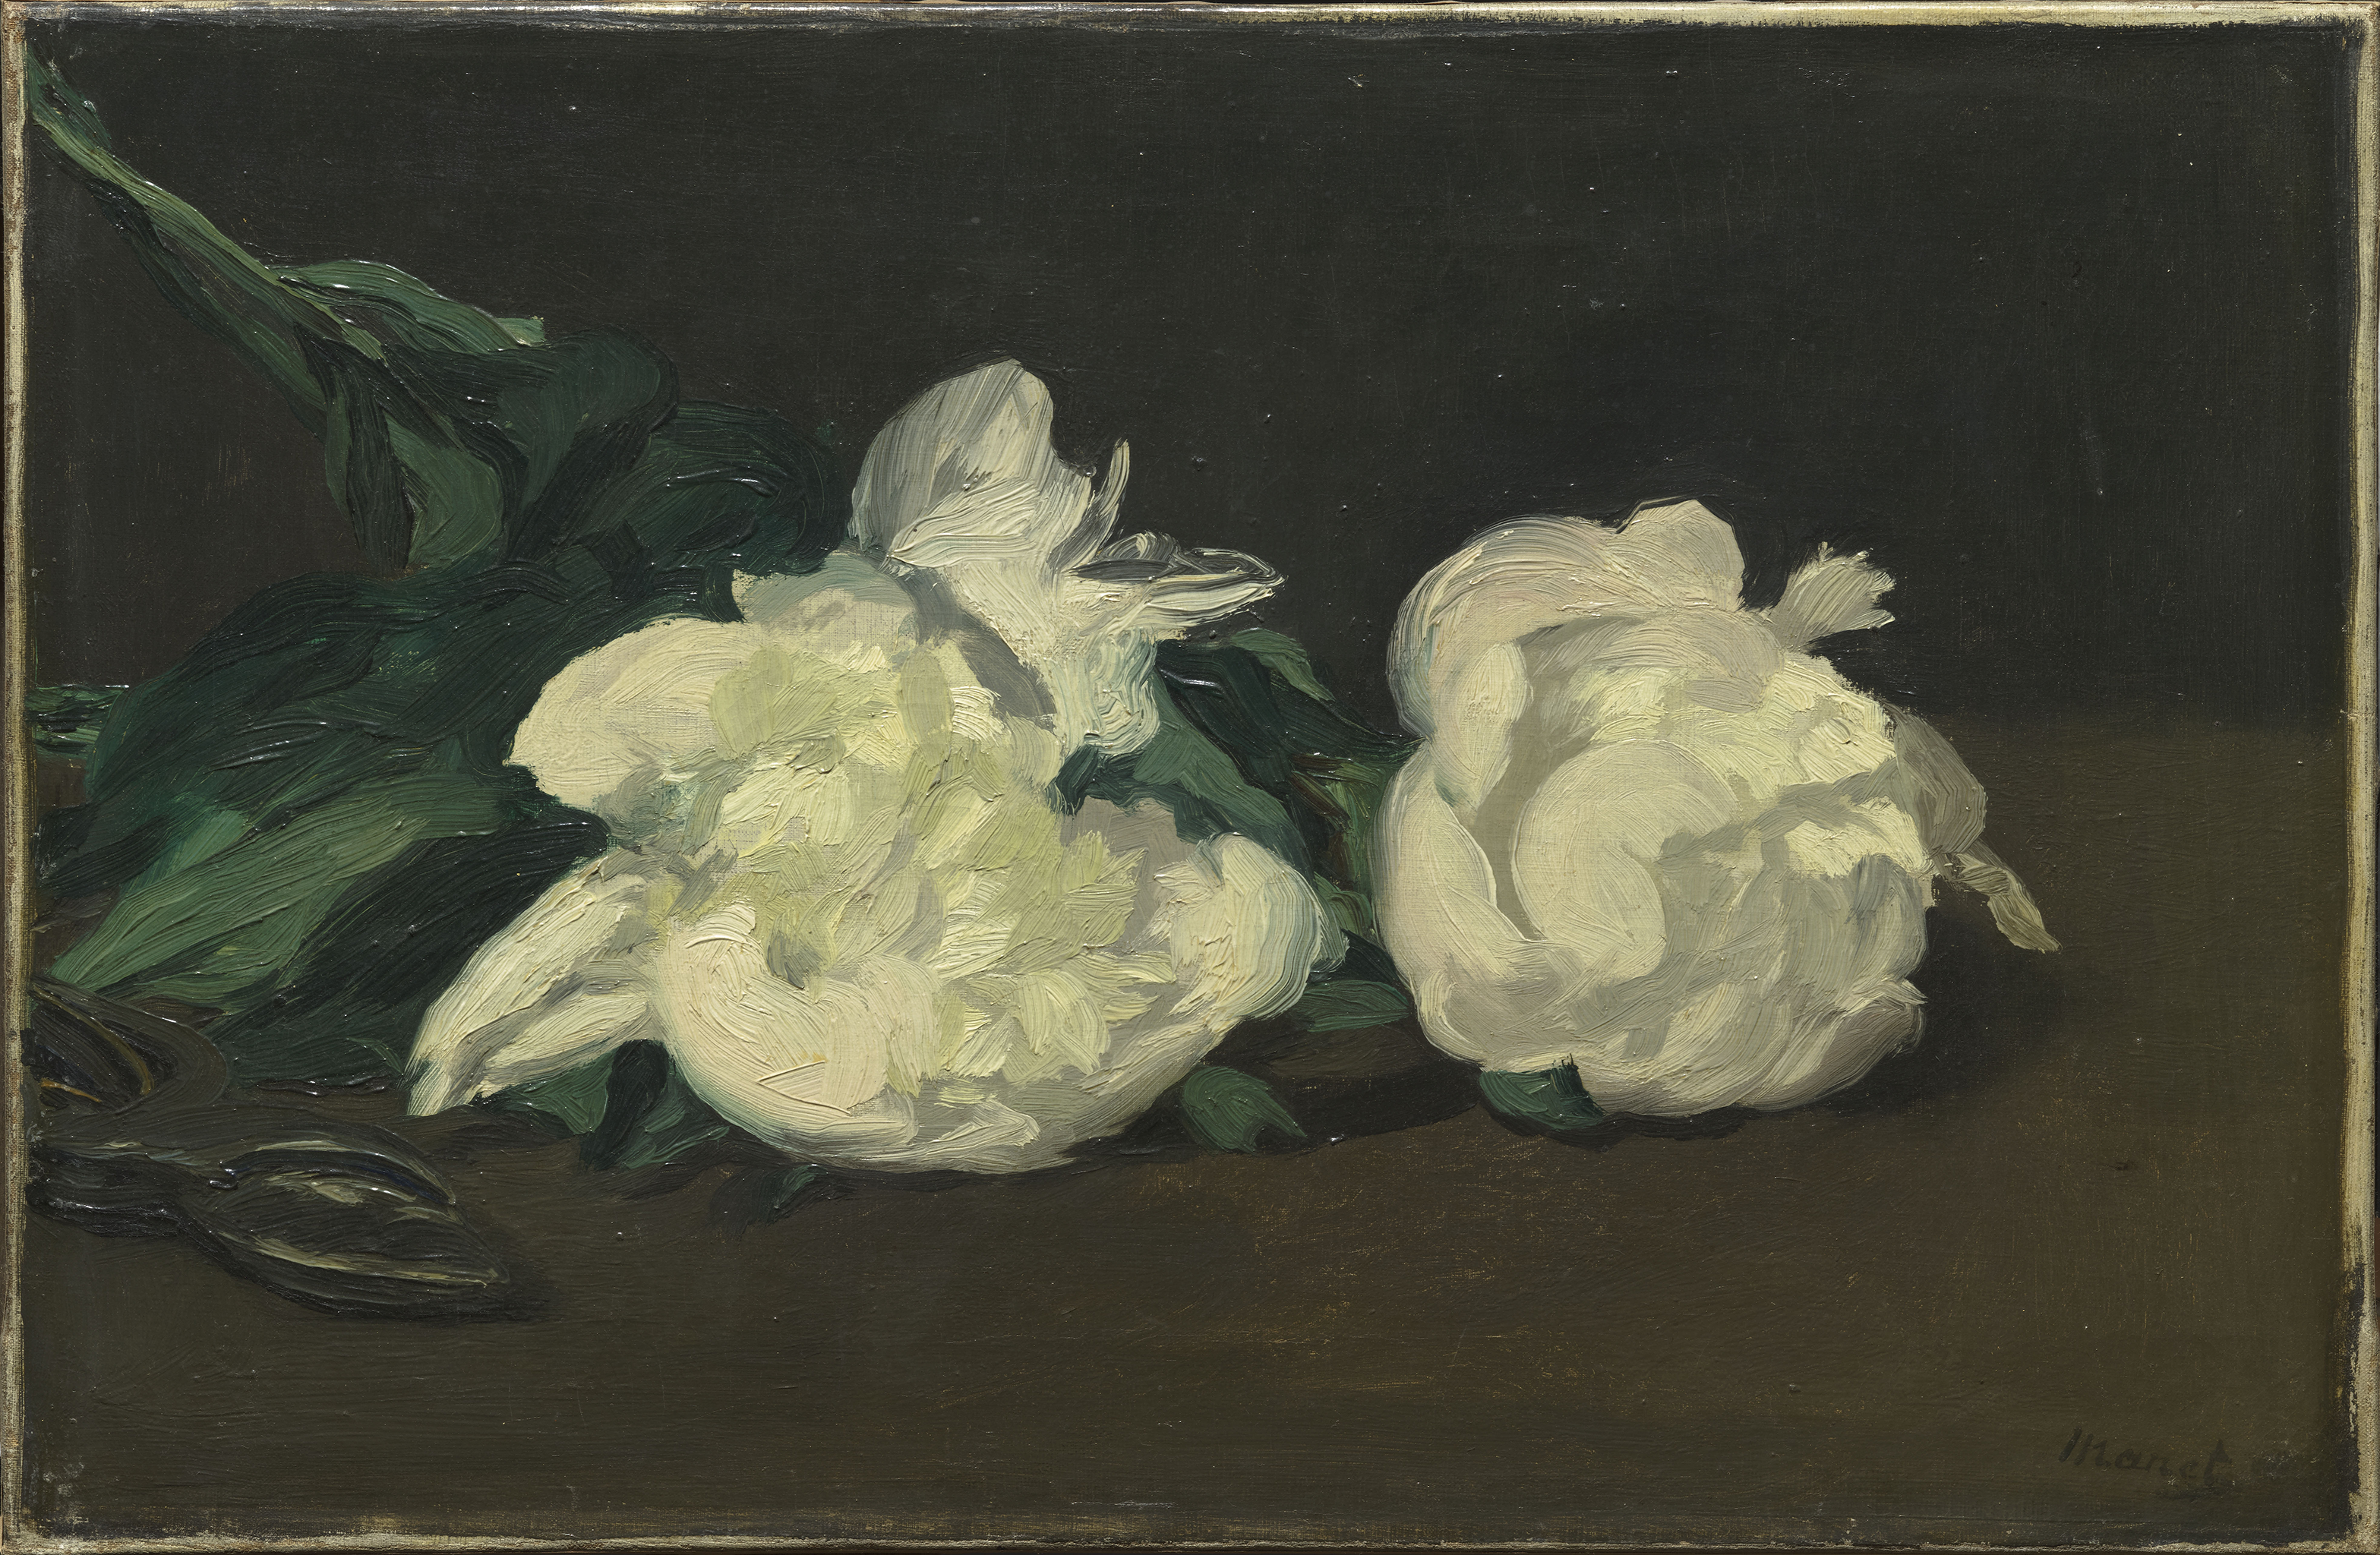 https://blobcdn.nelson-atkins.org/wpmediablob/FPC/img/Nineteenth-Century-Realism-Barbizon/526_2015.13.12_Manet_White-Lilacs-in-a-Crystal-Vase/manet-lilacs-02.png